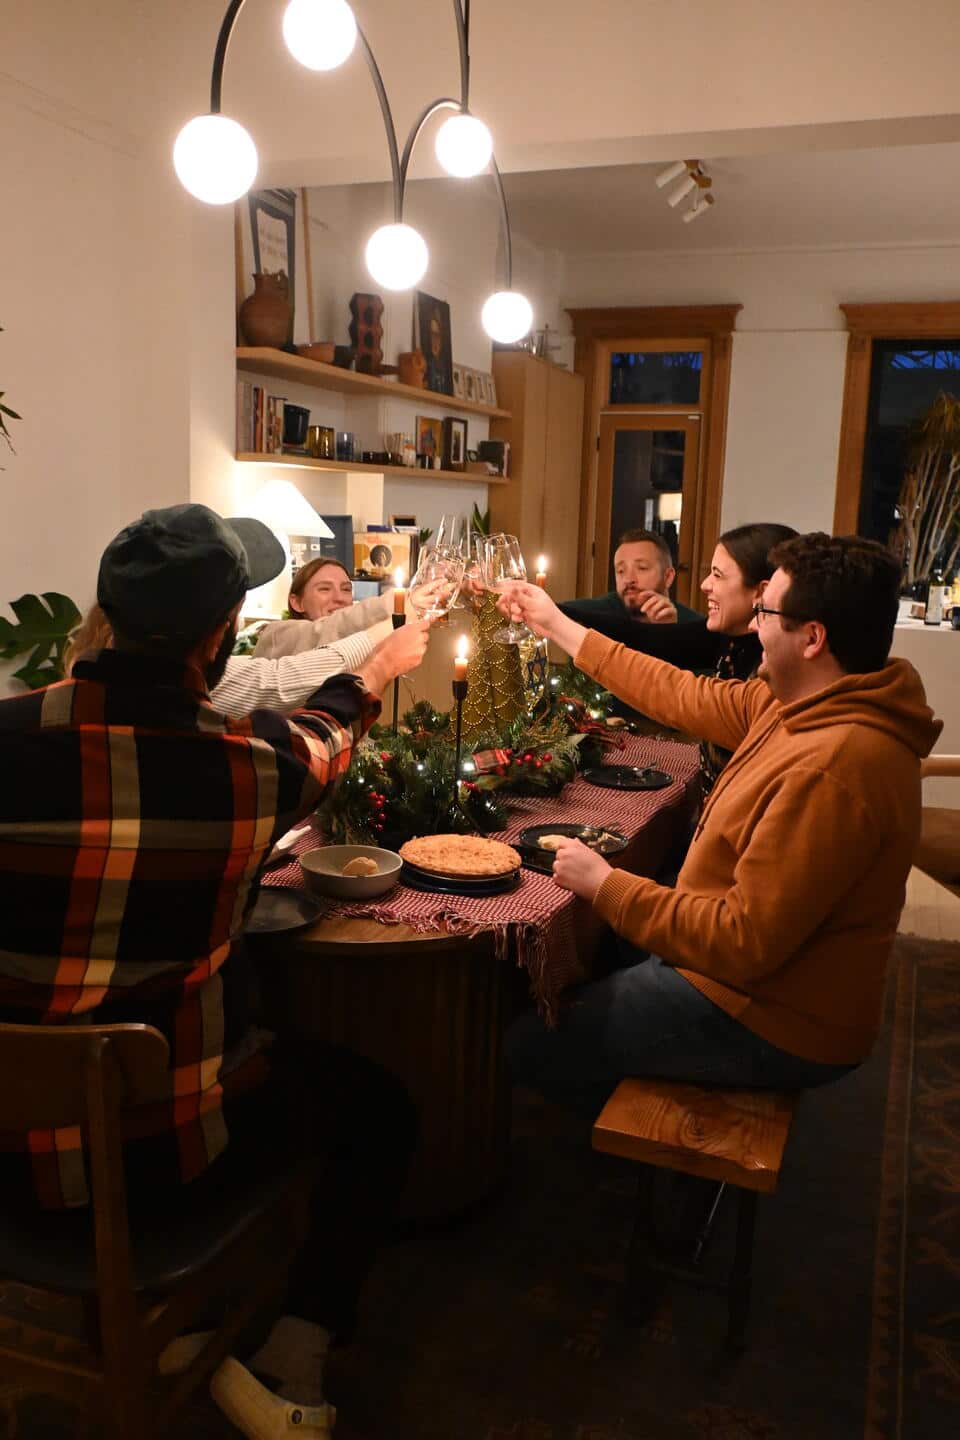 A group enjoying dinner together